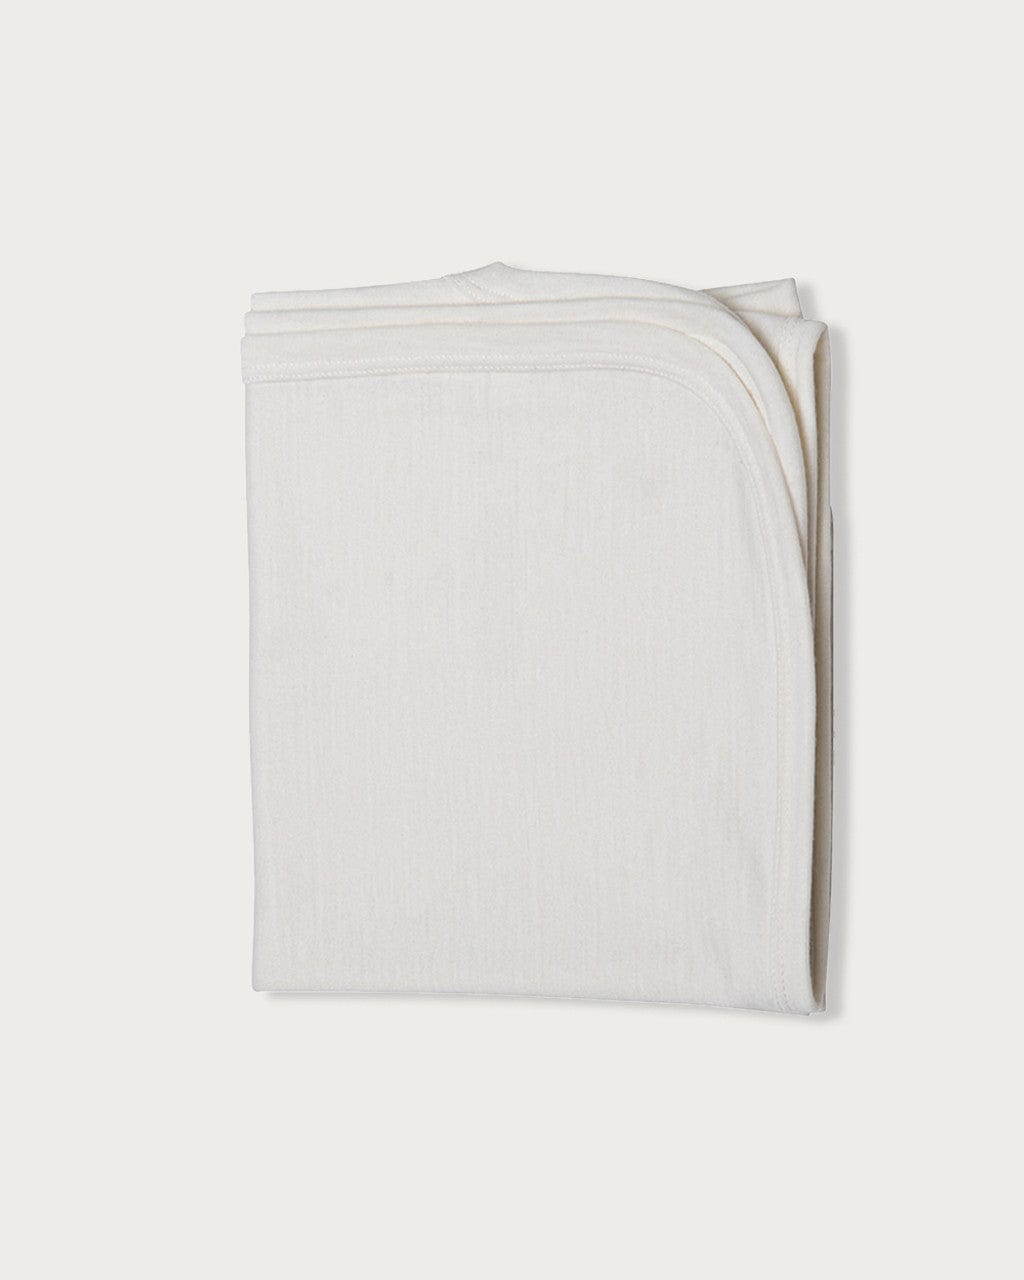 Babu Accessory Blanket Cream Merino Swaddle Wrap